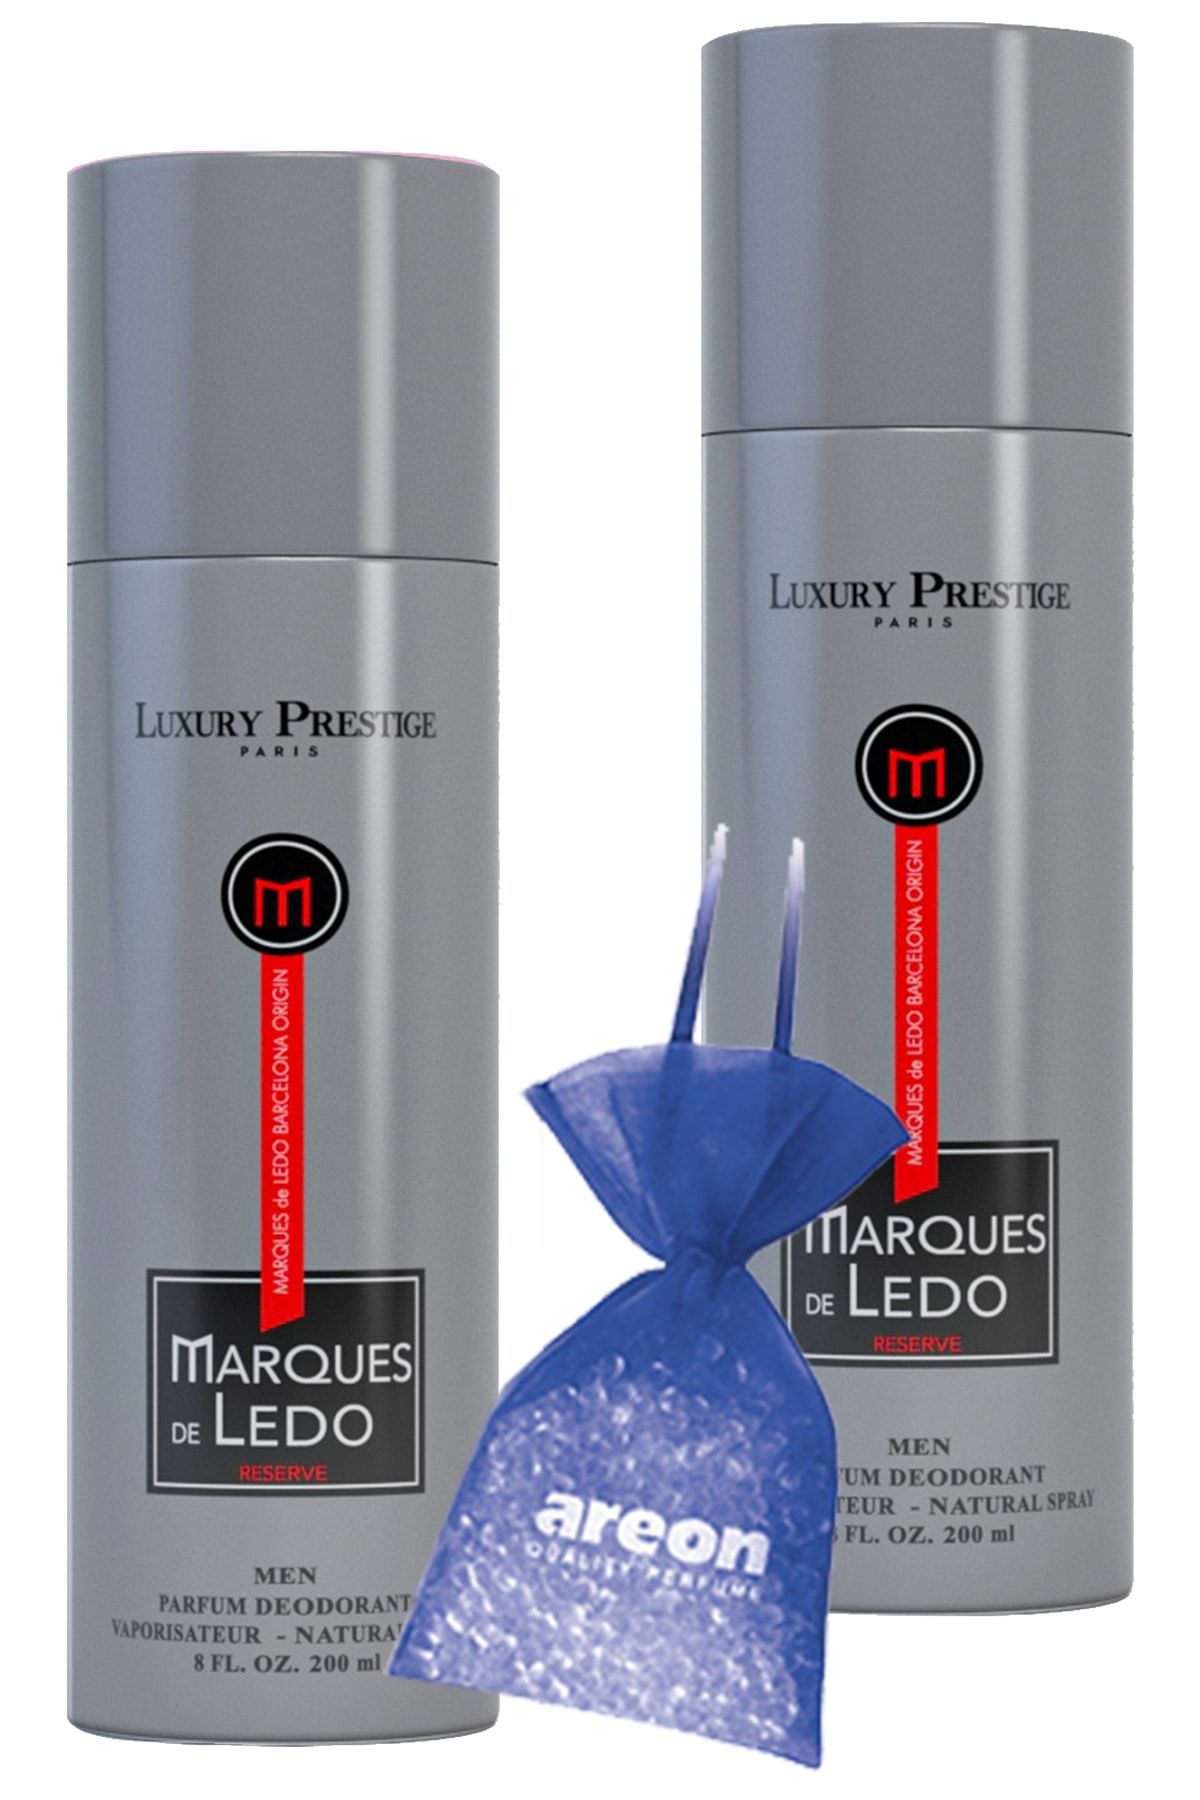 Luxury Prestige Luxury Prestıge Men Marques De Led Deo 200ml 2 li Invıctus Kokusu  Nature Gardrop Kokusu Hediye